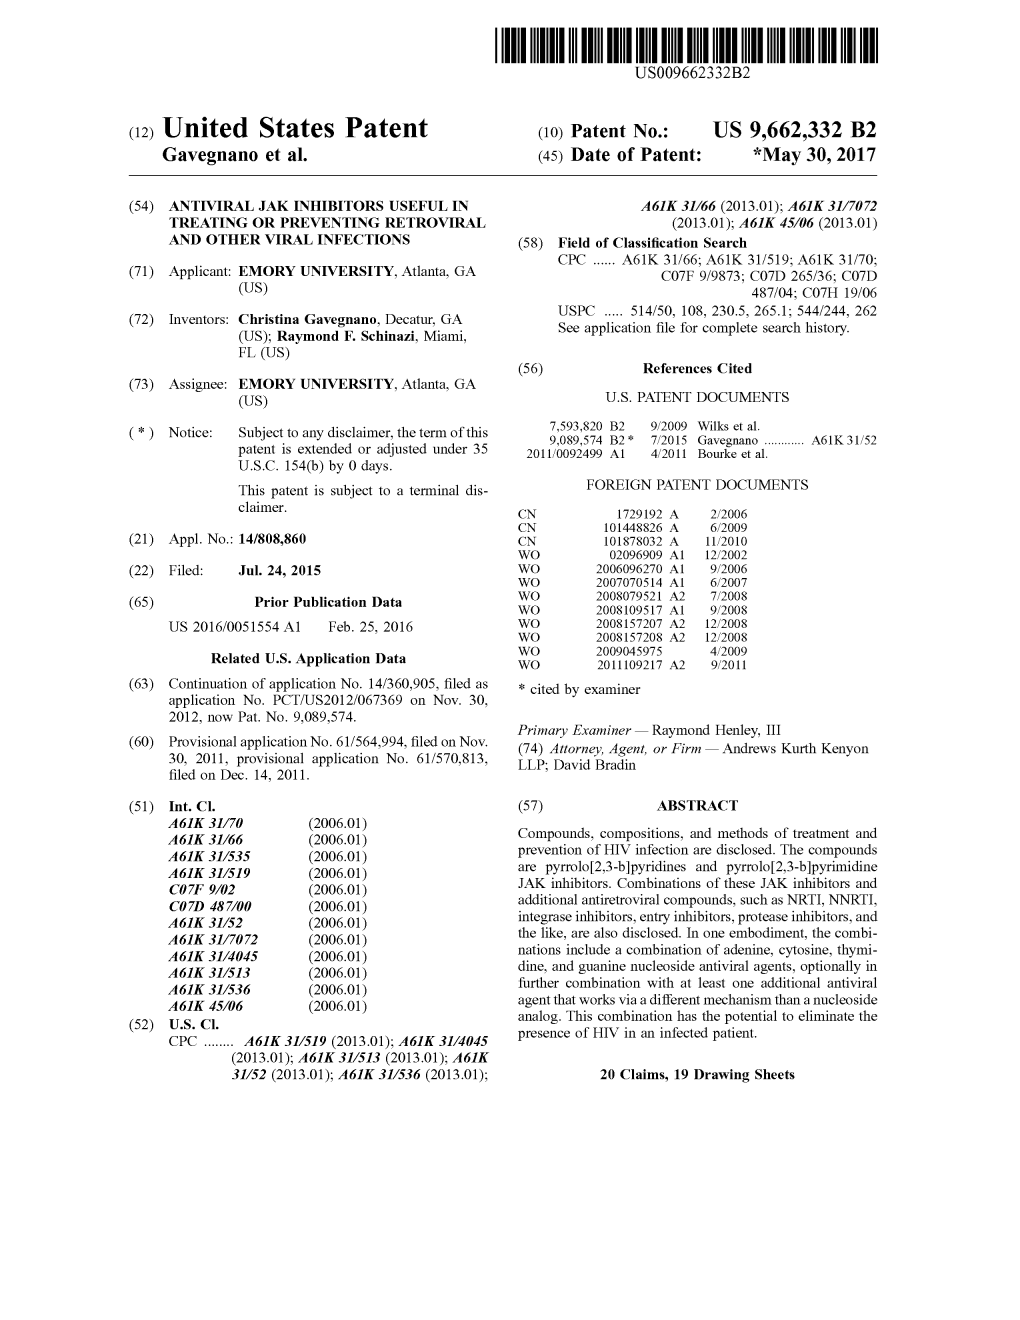 (12) United States Patent (10) Patent No.: US 9,662,332 B2 Gavegnano Et Al